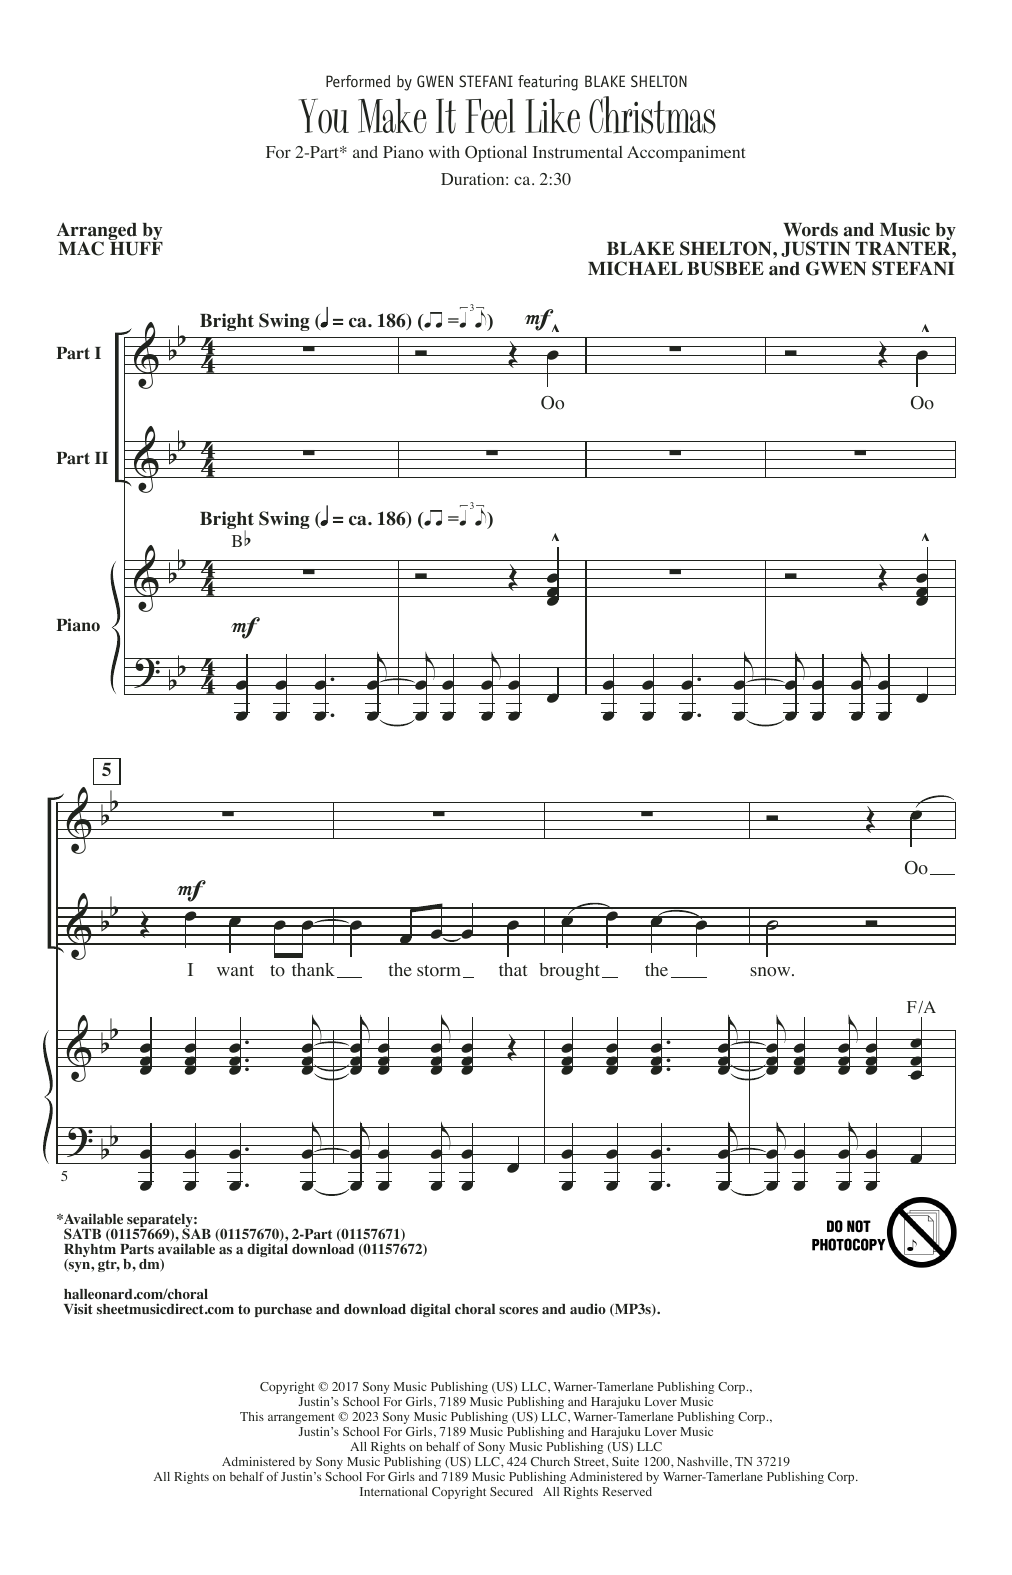 Gwen Stefani featuring Blake Shelton You Make It Feel Like Christmas (arr. Mac Huff) sheet music notes and chords arranged for 2-Part Choir